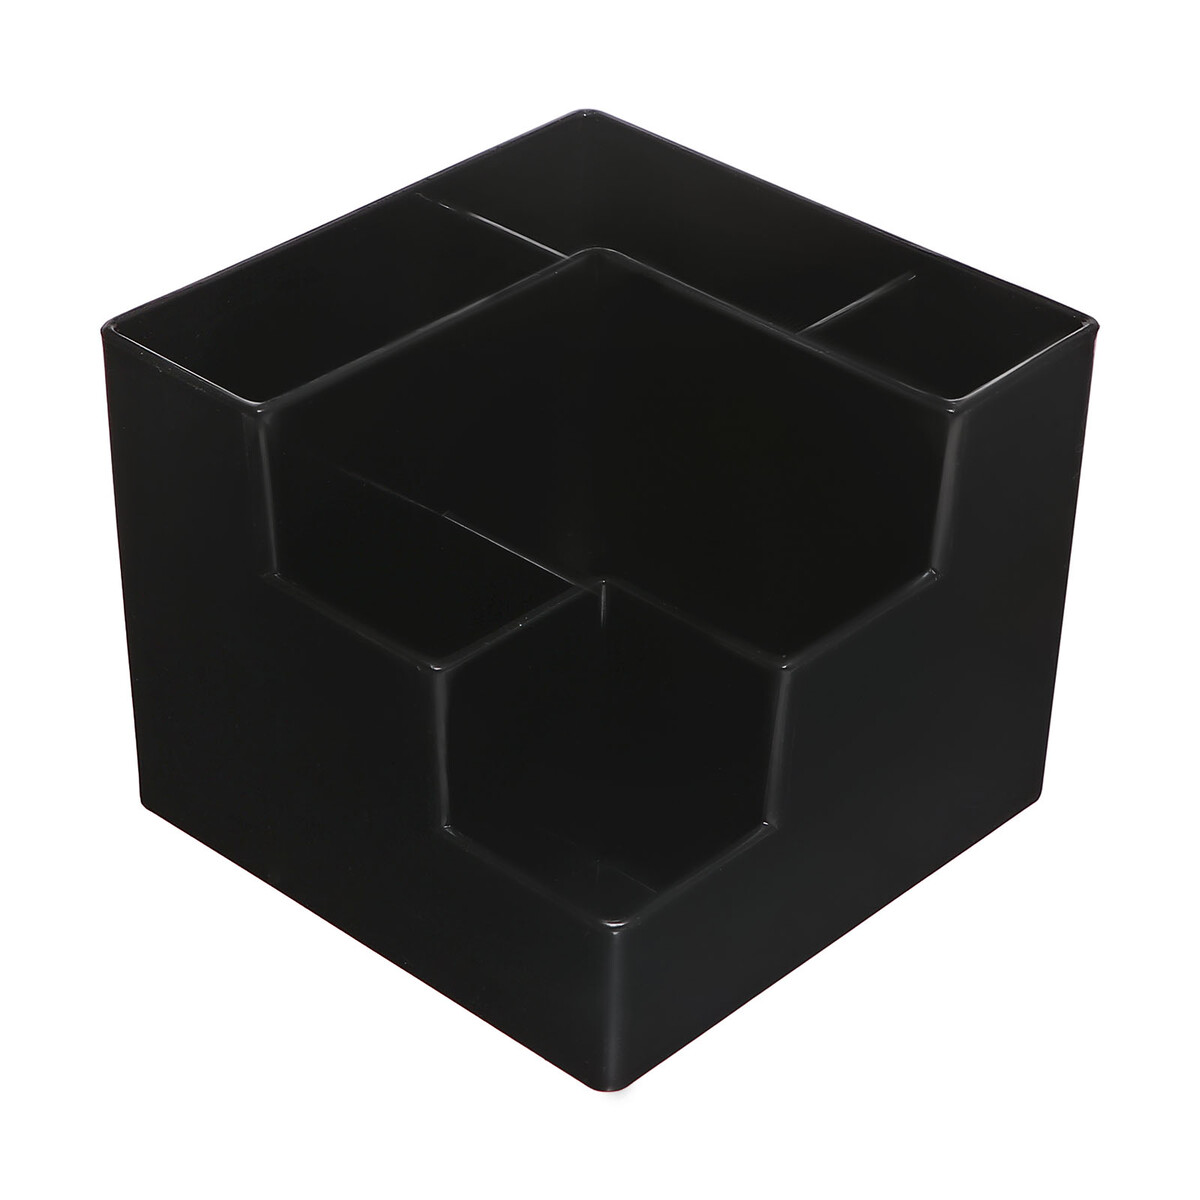 Подставка-органайзер для канцелярии 6 отделений цвет черная подставка на подголовник mdc 106 пластиковая бежевая